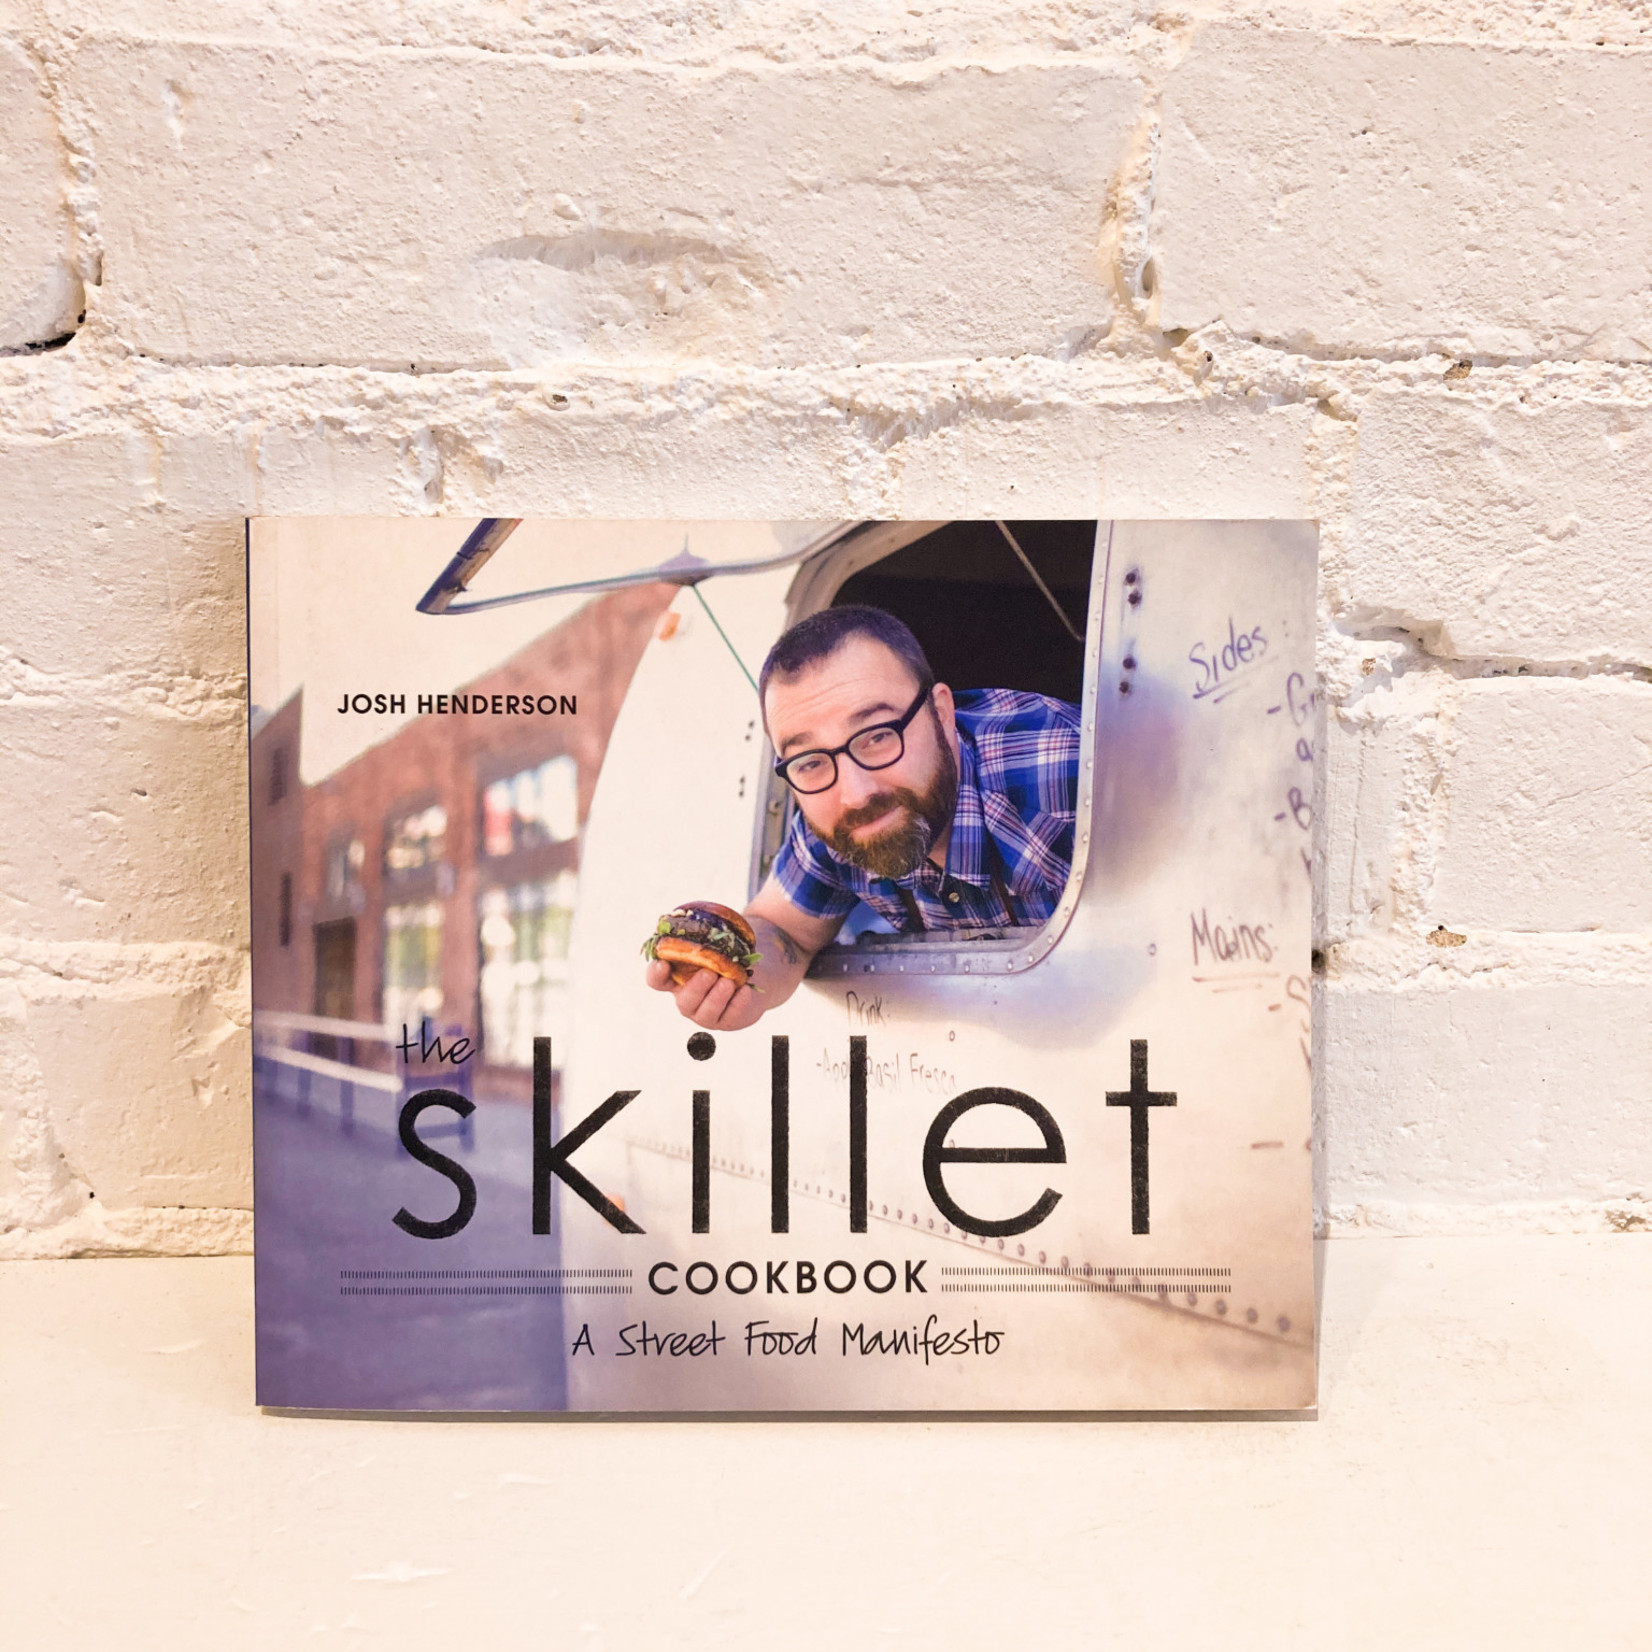 The Skillet Cookbook by Josh Henderson